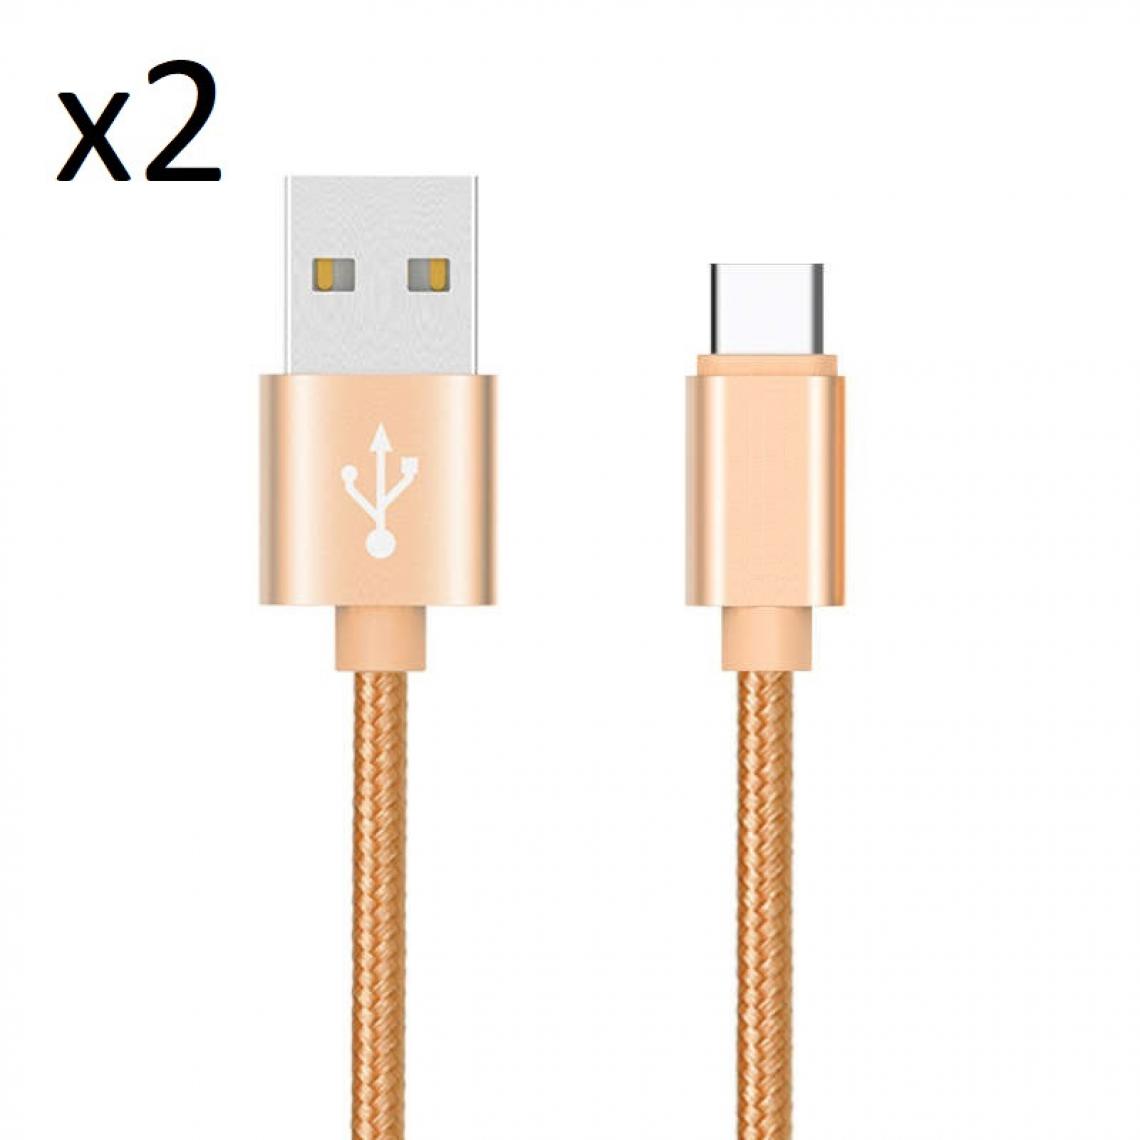 Shot - Pack de 2 Cables Metal Nylon Type C pour ASUS ROG Phone II Smartphone Android Chargeur (OR) - Chargeur secteur téléphone